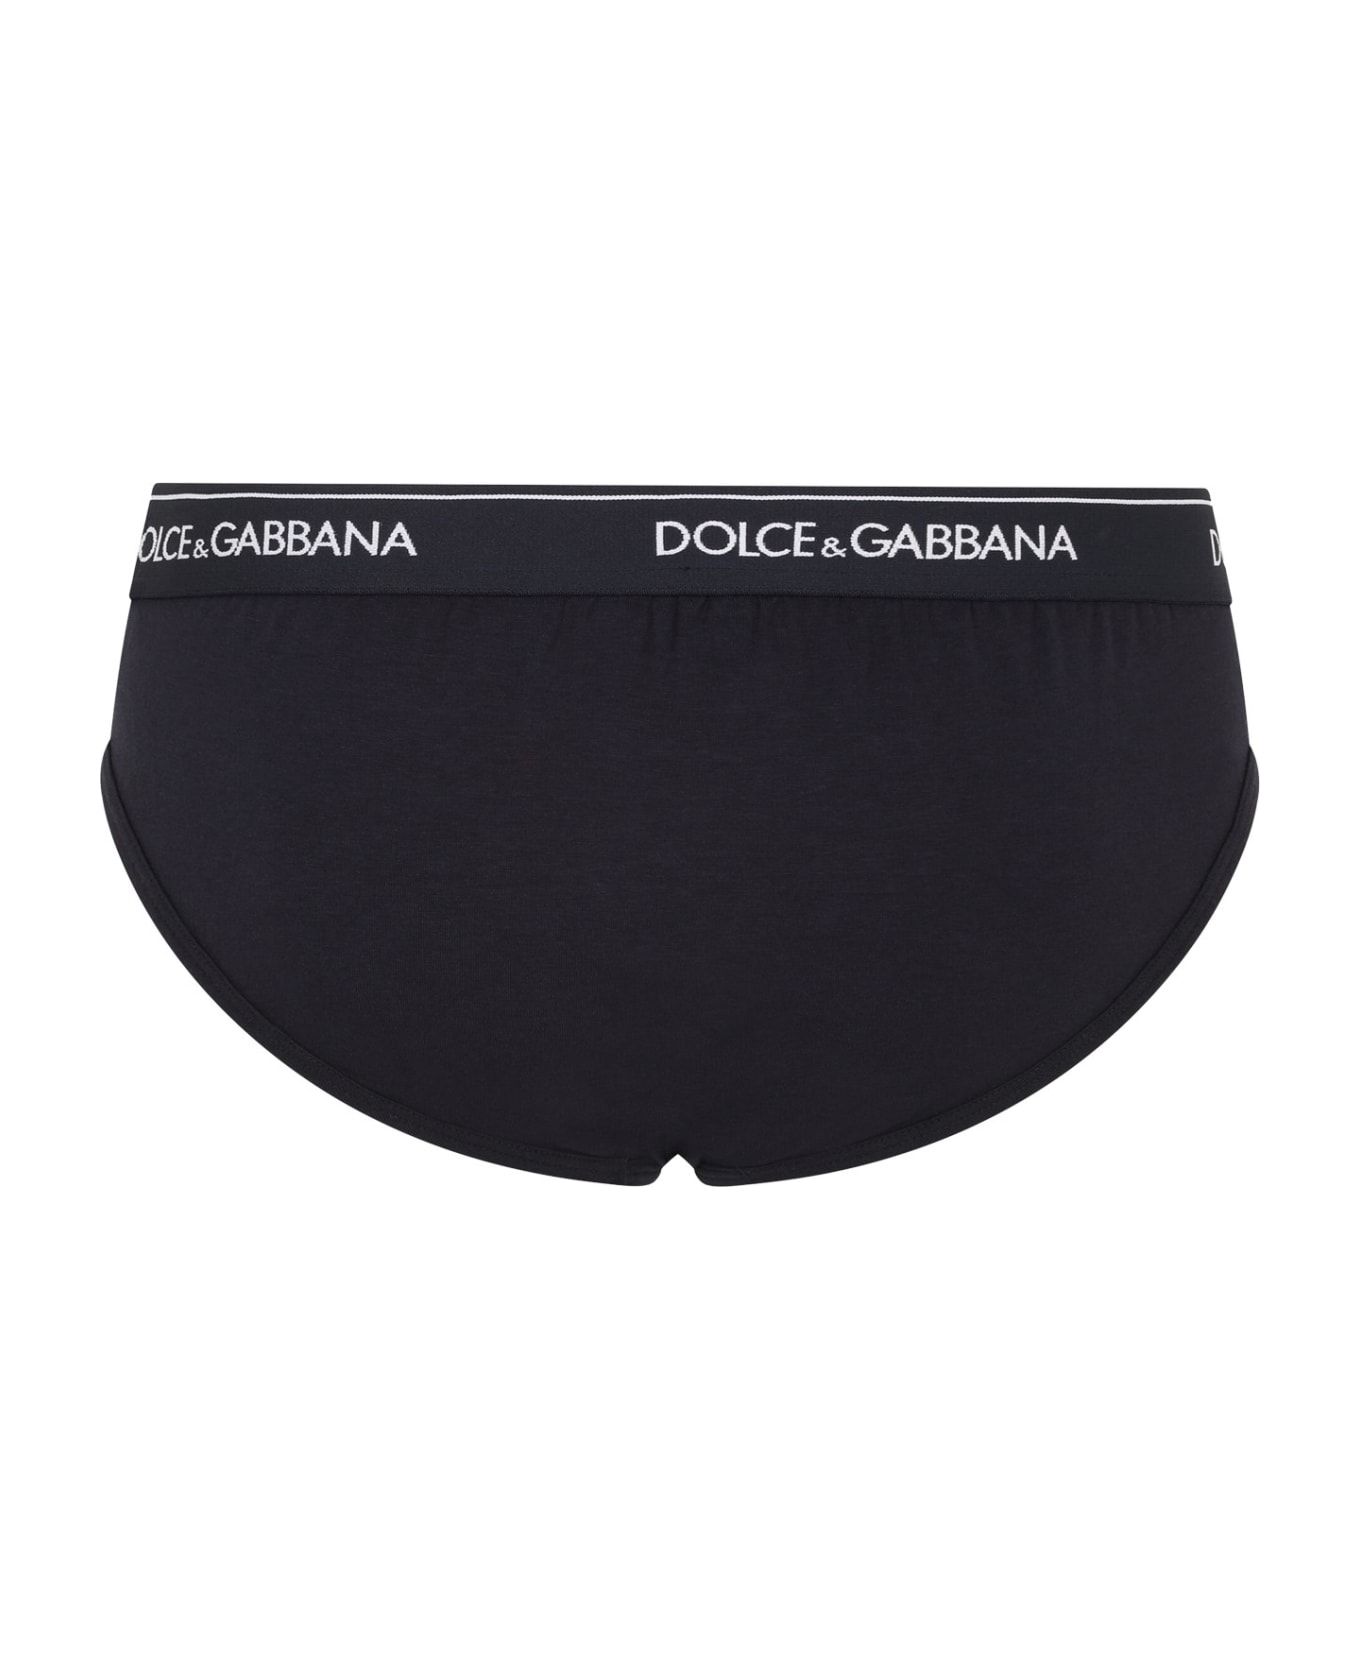 Dolce & Gabbana Cotton Briefs - Black ショーツ